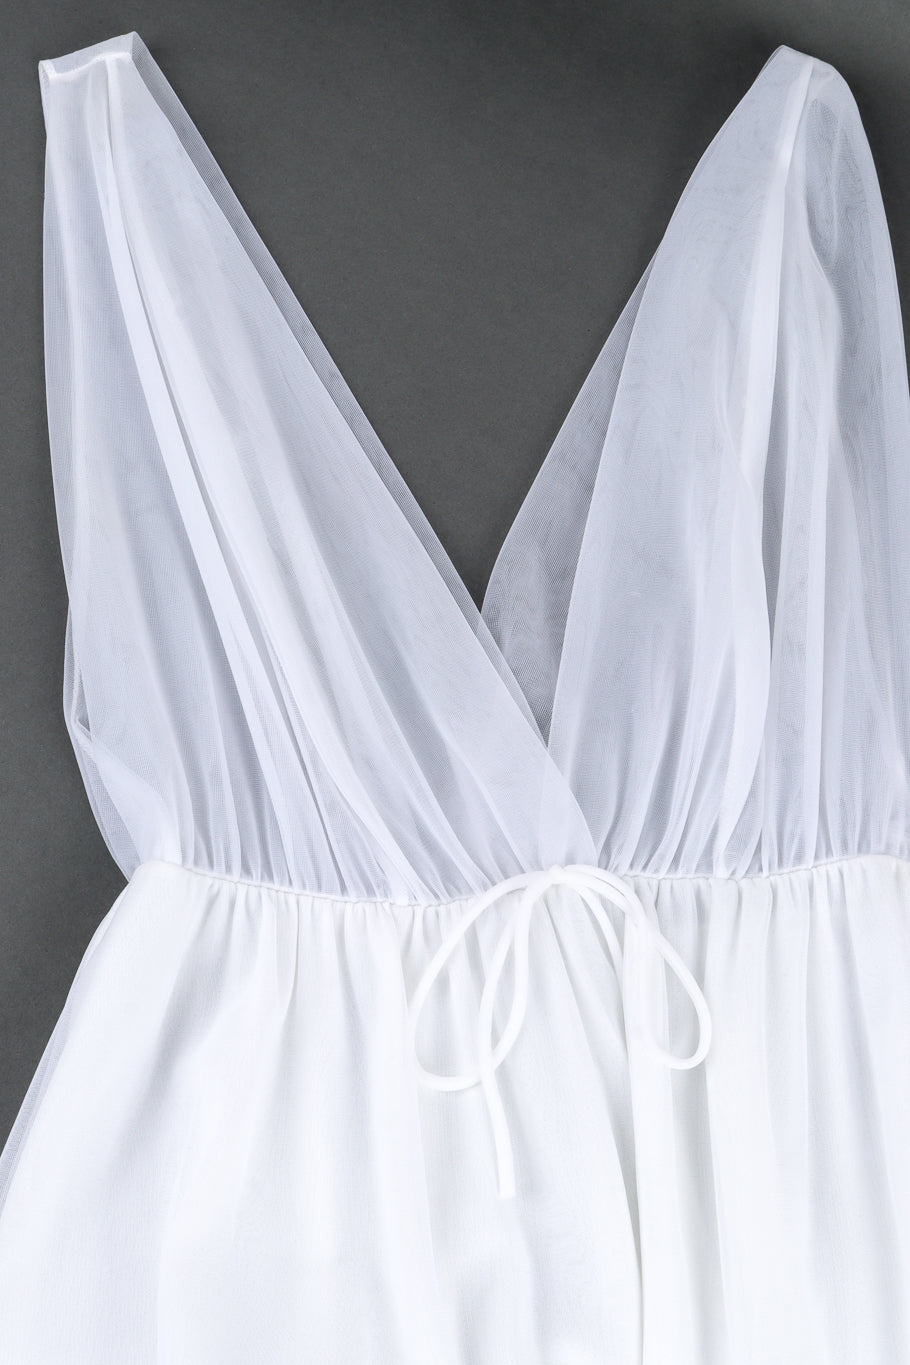 Vintage Sears Marabou Trim Robe & Nightgown Set dress front laid flat @recess la